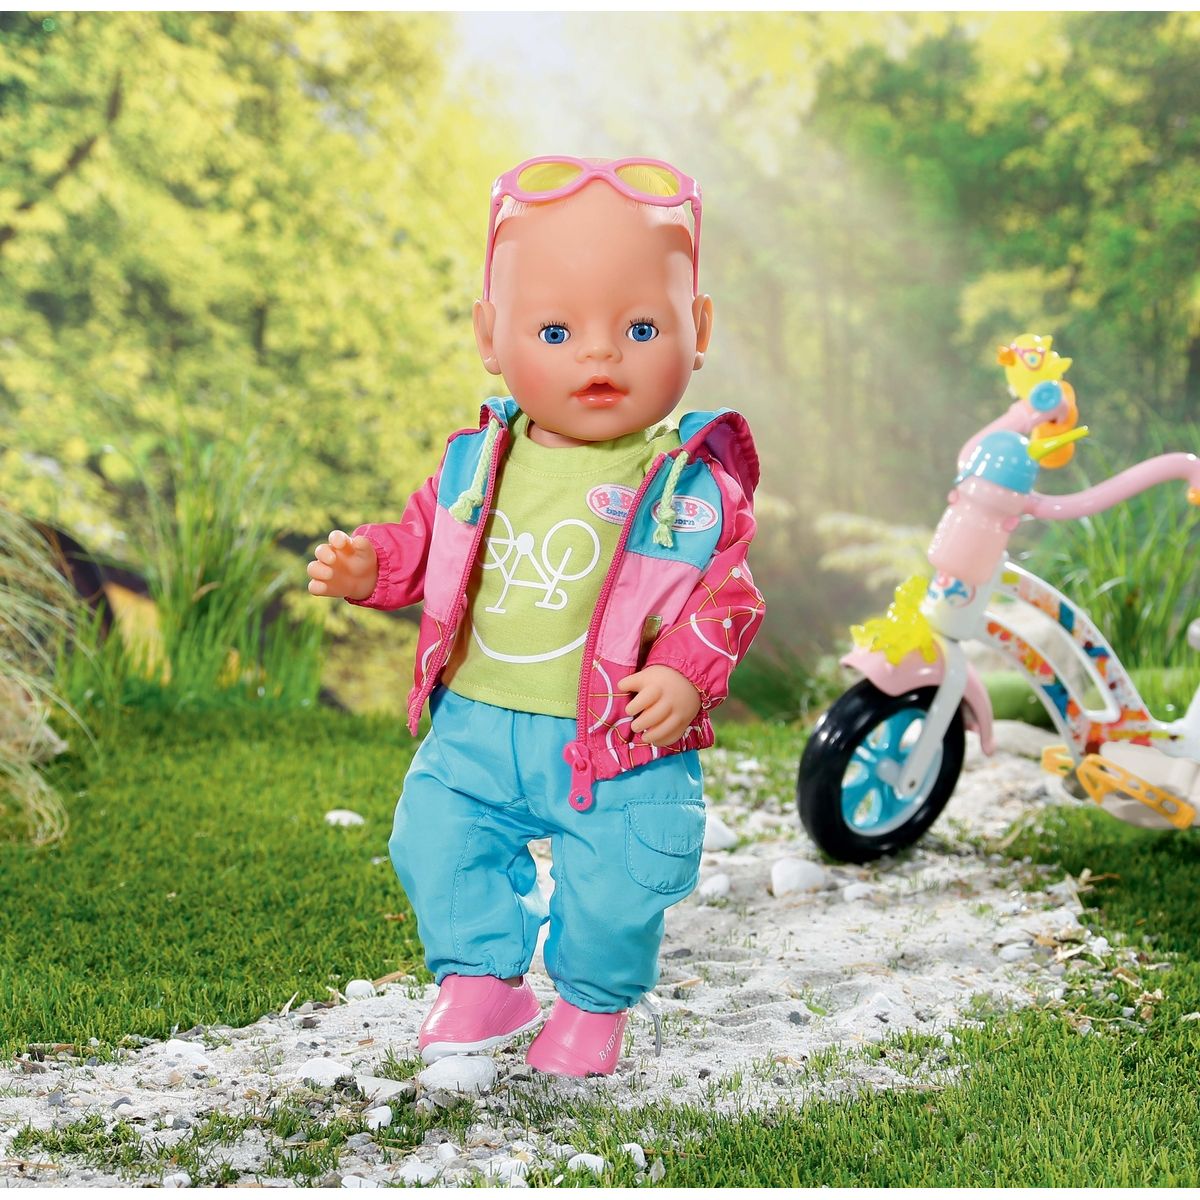 Беби бон бесплатную. Одежда Zapf Creation Baby born. Zapf Creation комплект одежды для велопрогулки для куклы Baby born 823705. Одежда для велосипедной прогулки Беби Борн. Беби бона Baby born одежда комплект.